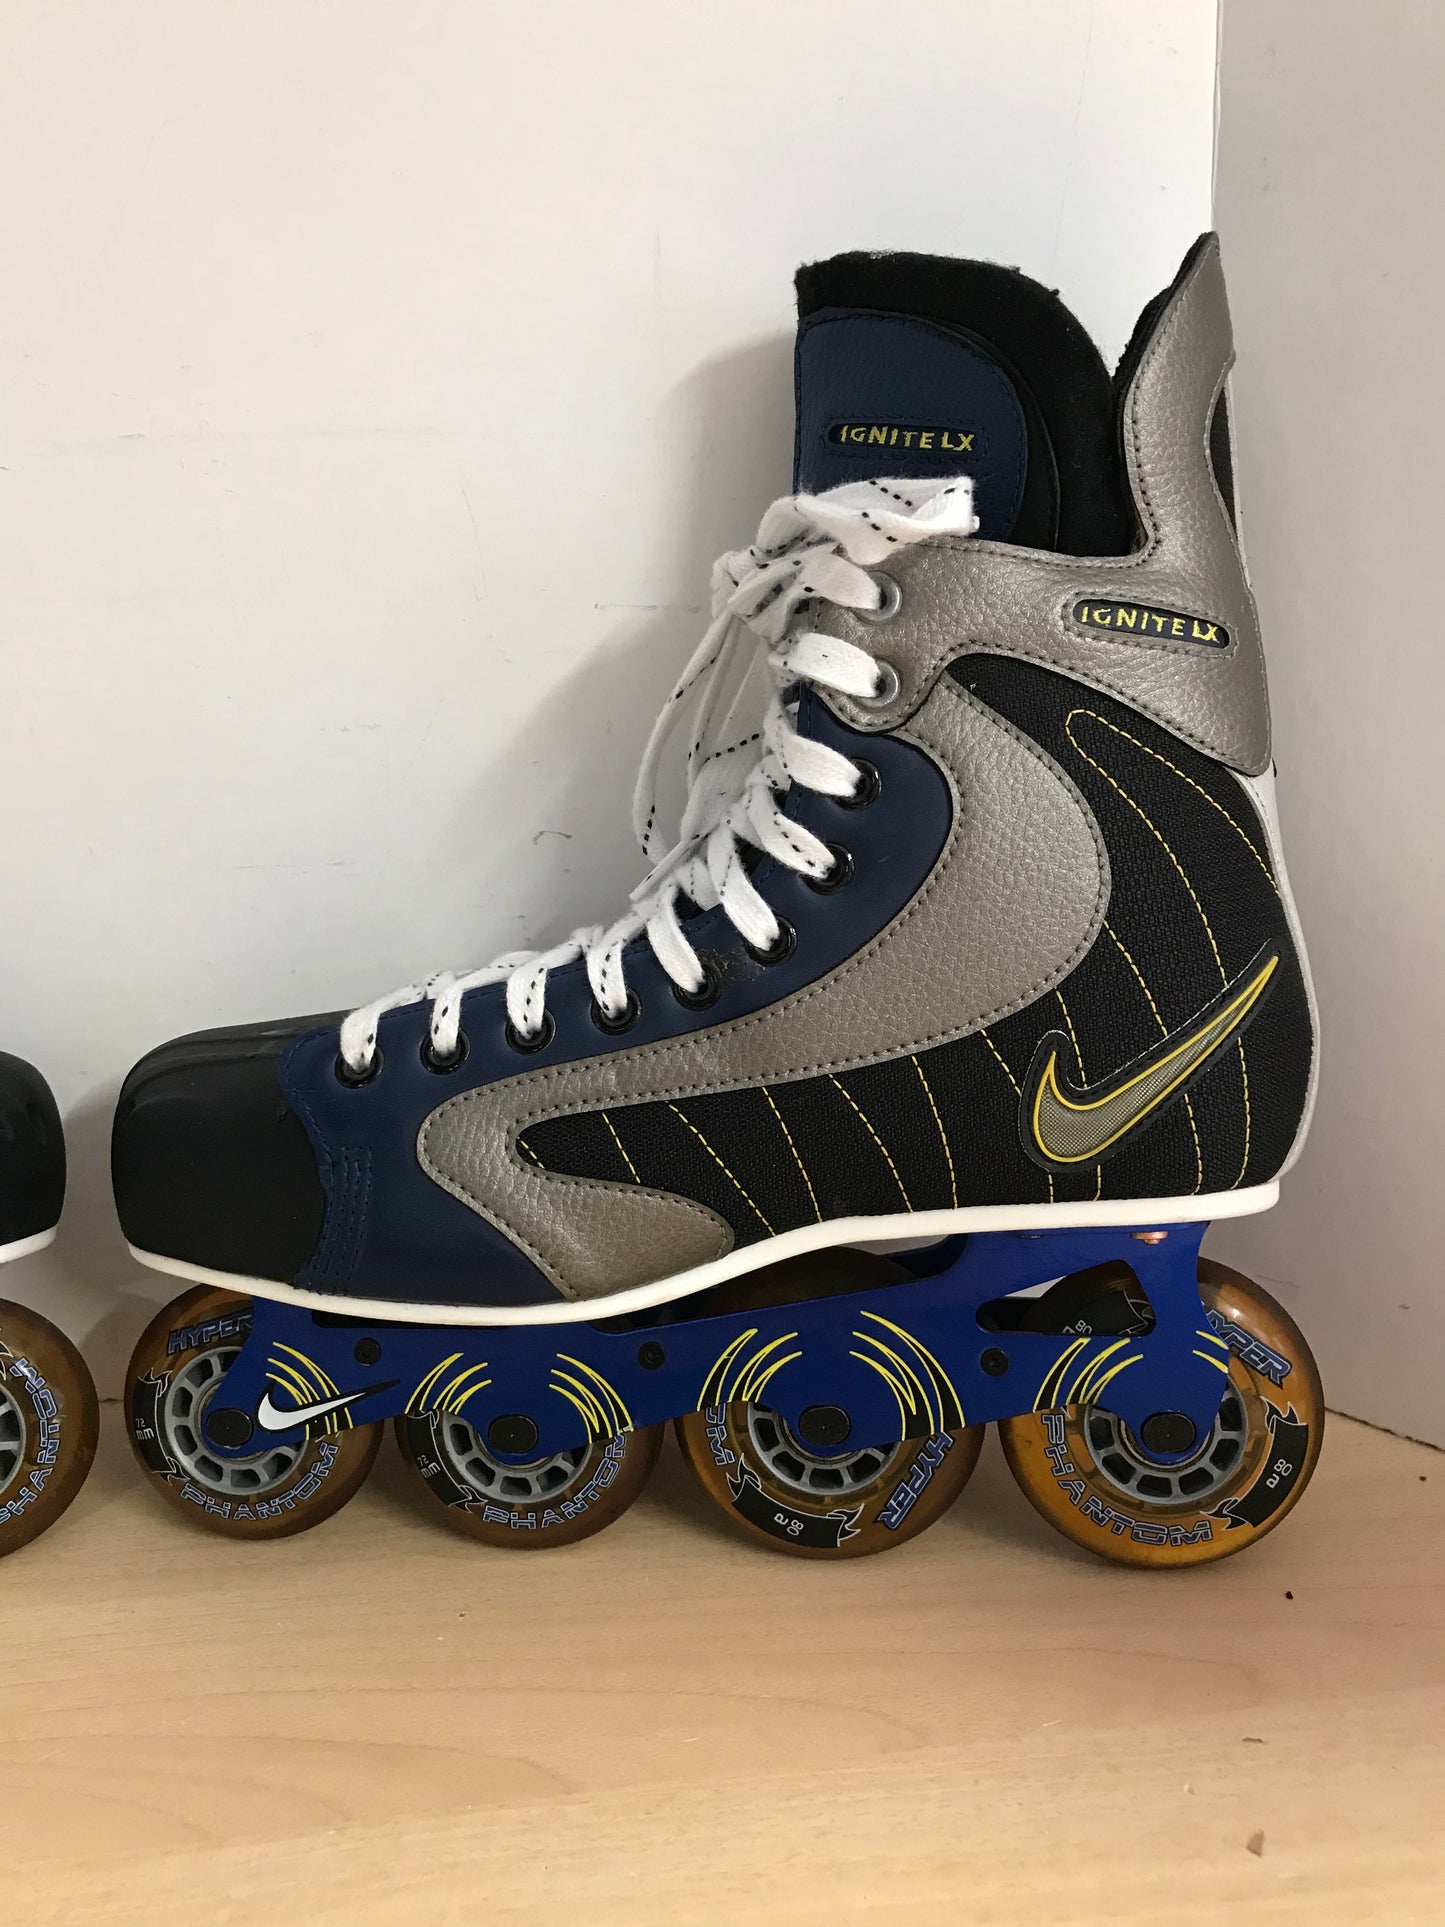 Hockey Roller Hockey Skates Men's Size 10 EE Shoe Size Nike New Demo Model